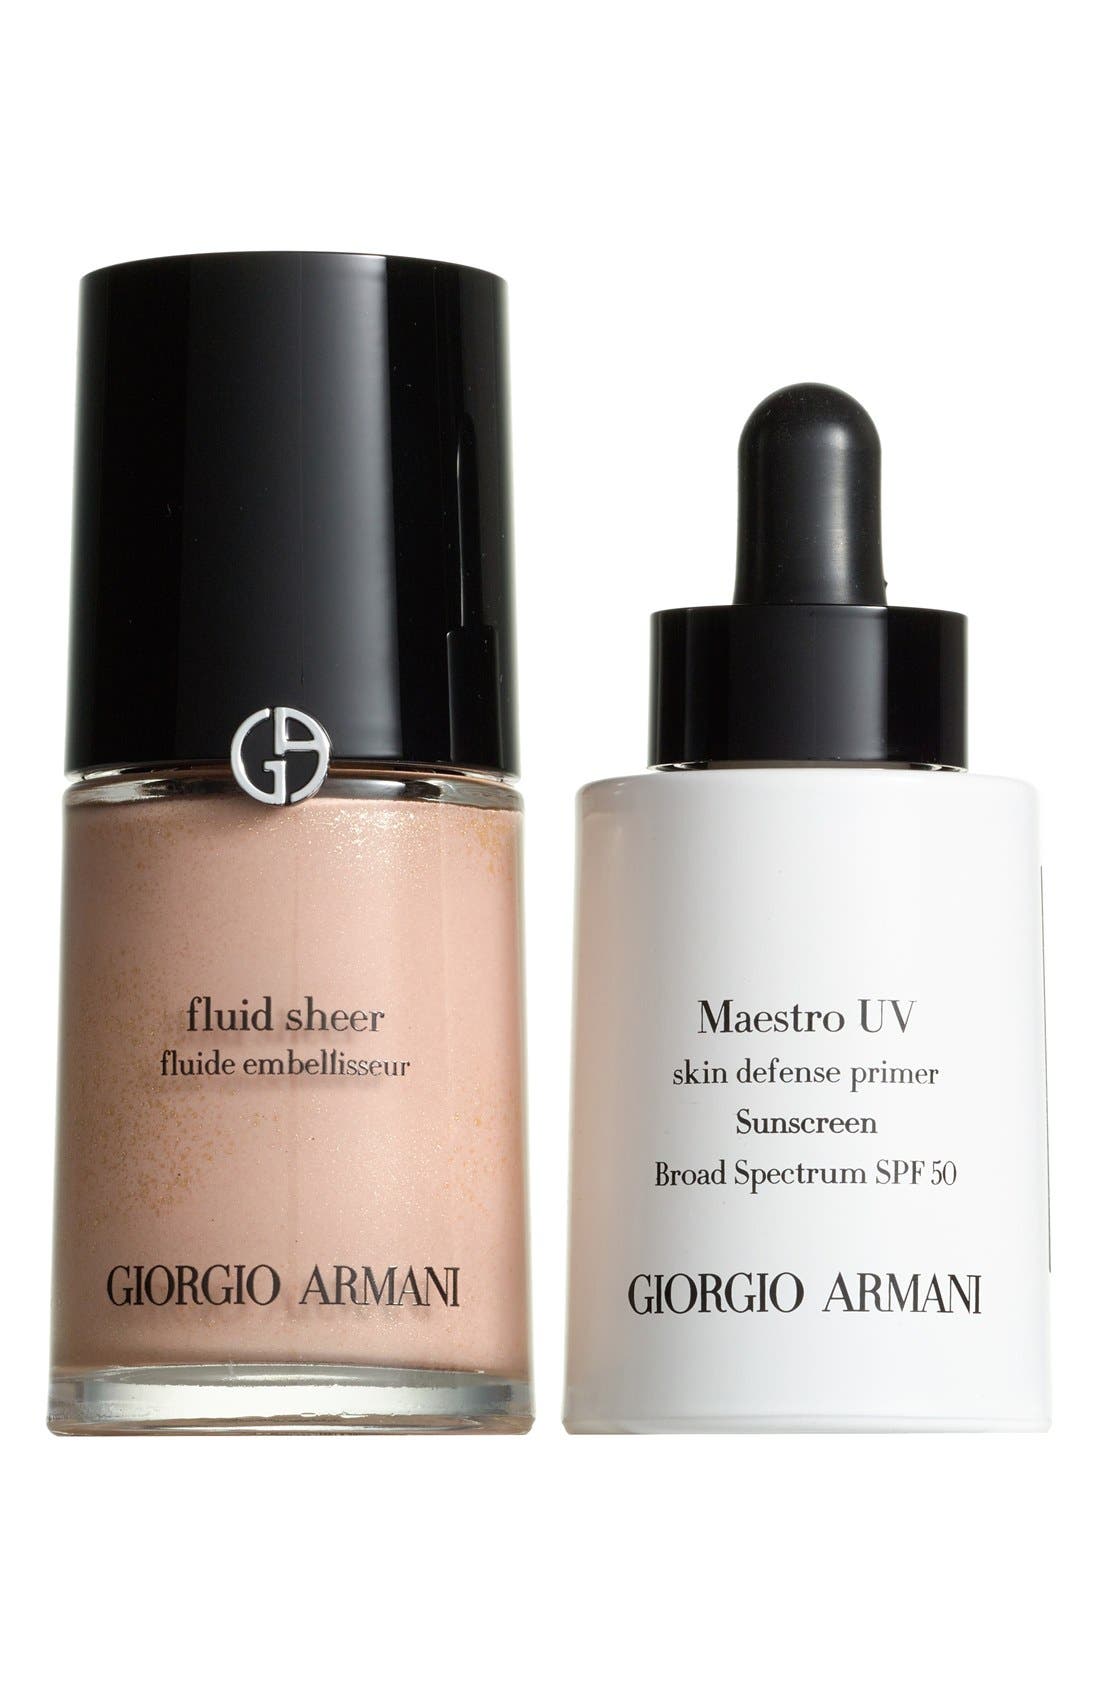 Giorgio Armani Makeup Duo (USD $126 